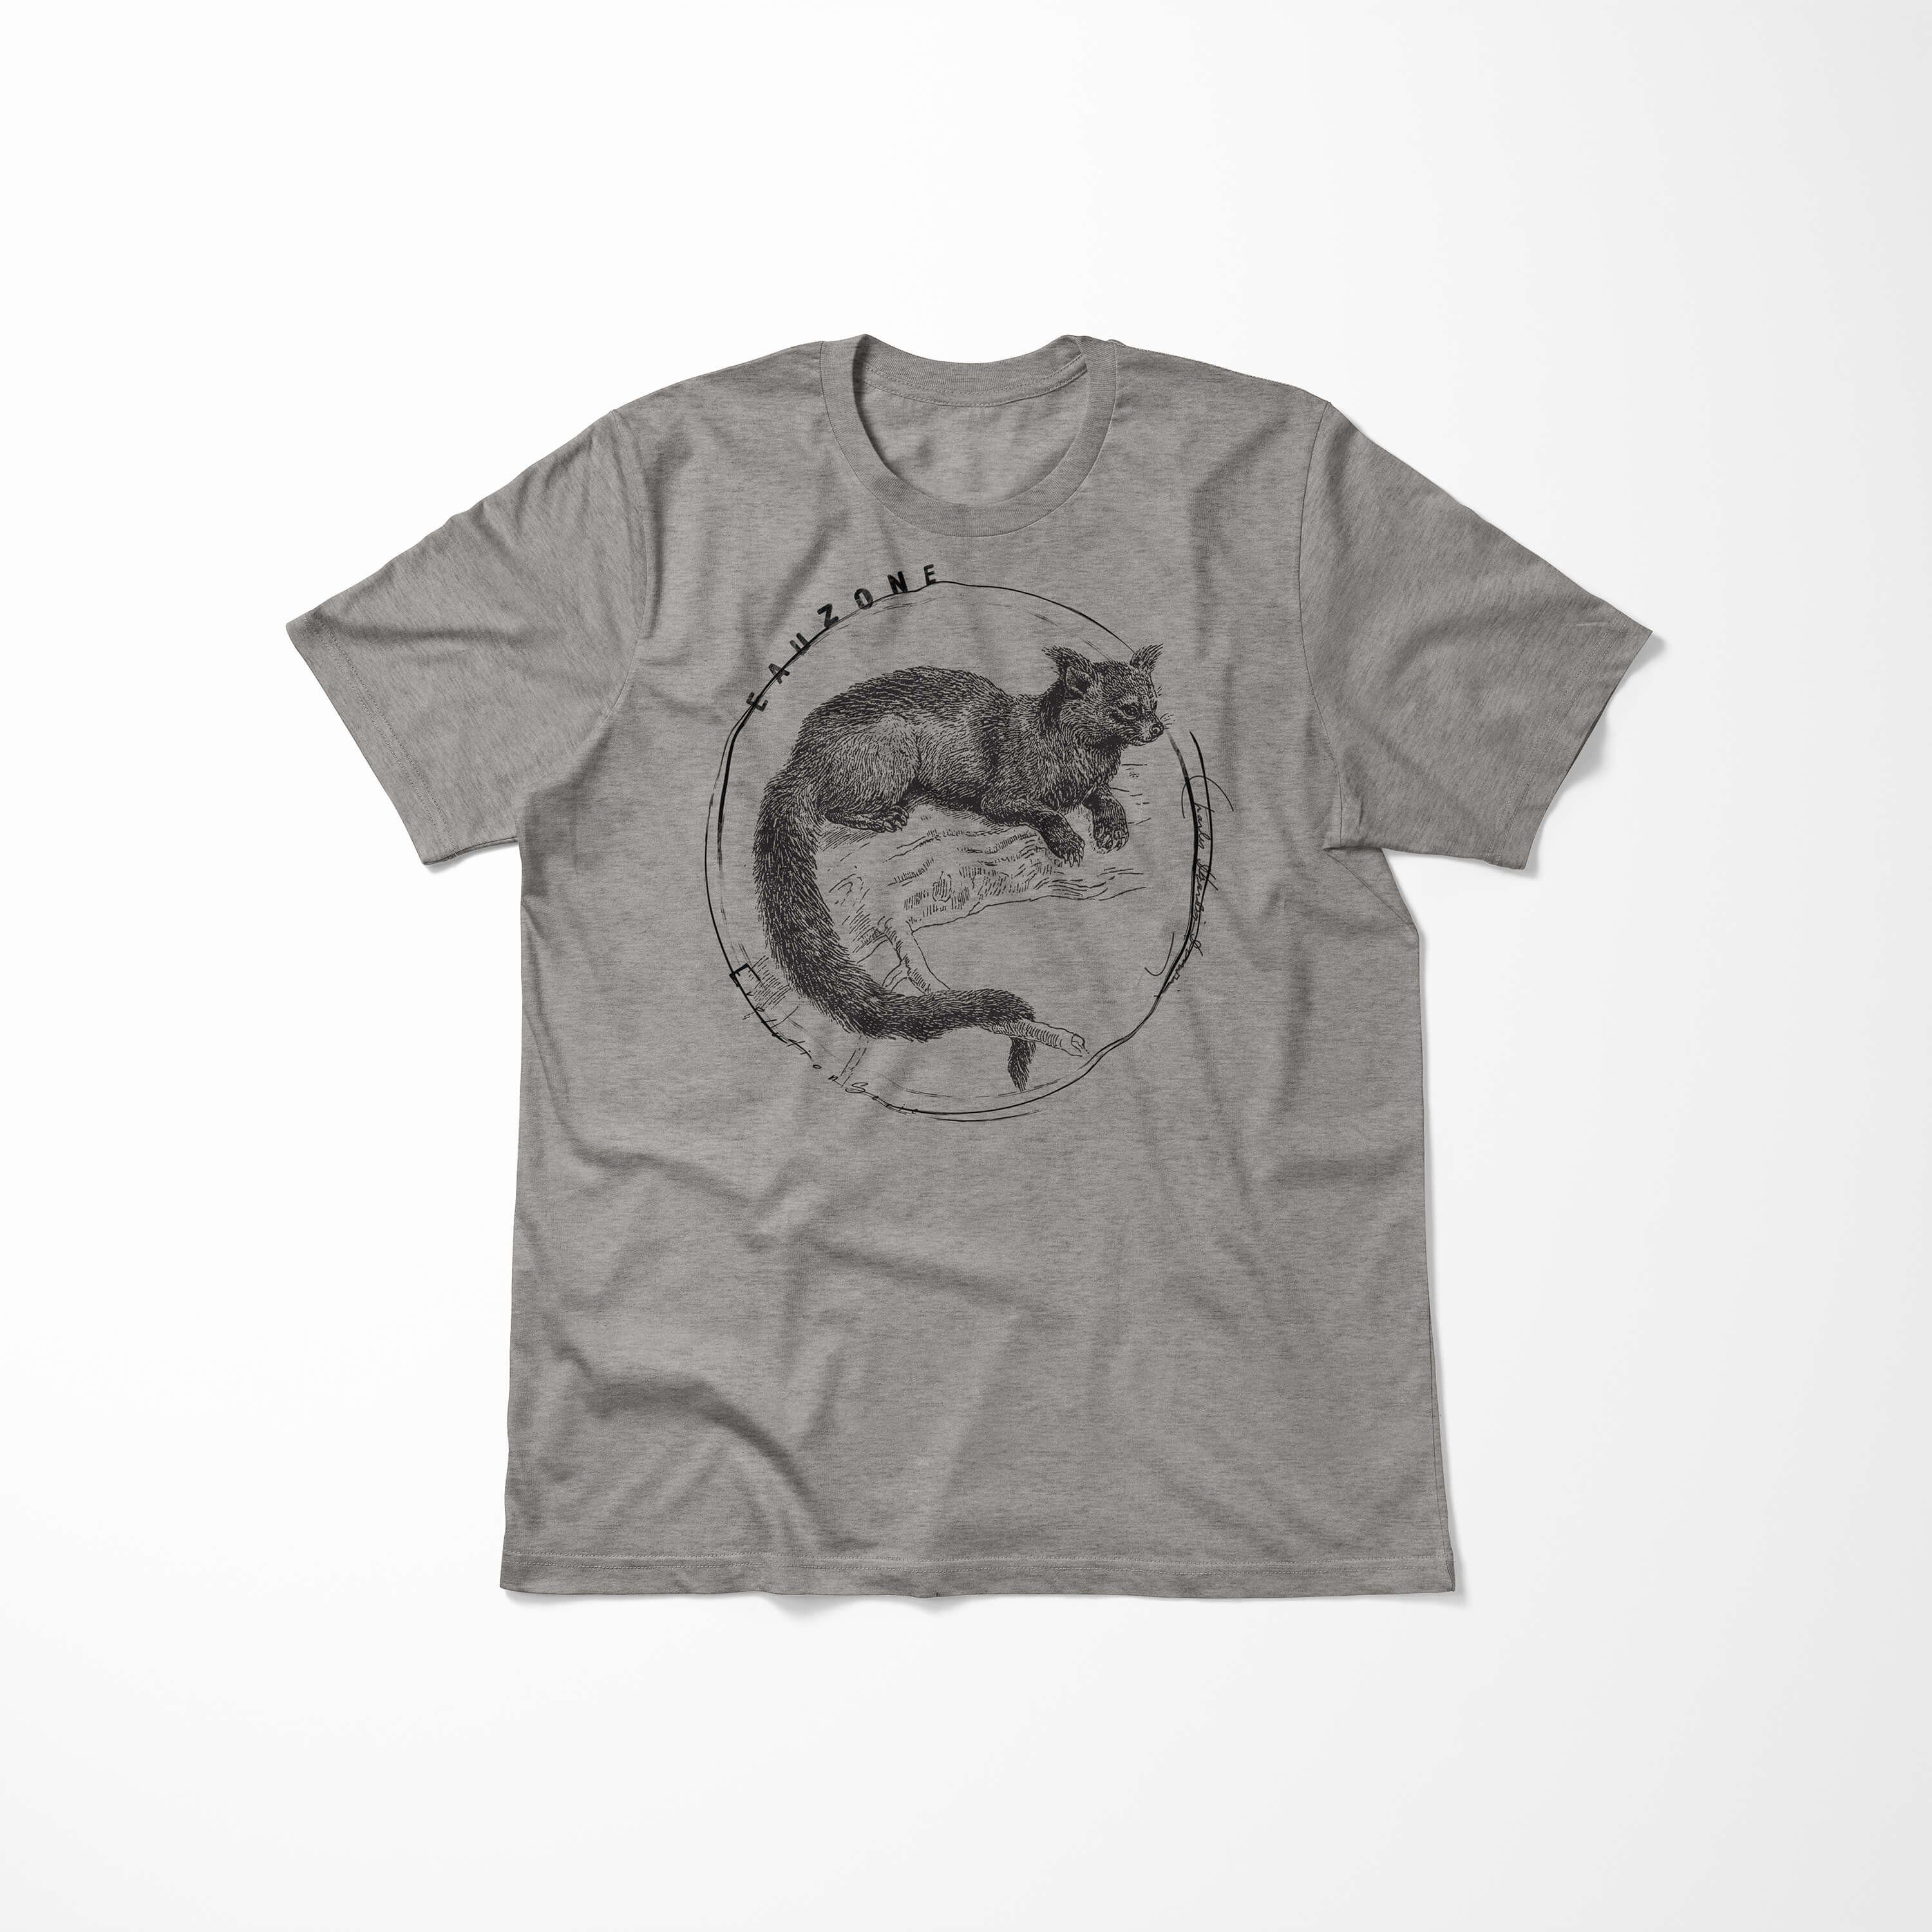 T-Shirt Ash Evolution Sinus Marderbär Herren Art T-Shirt